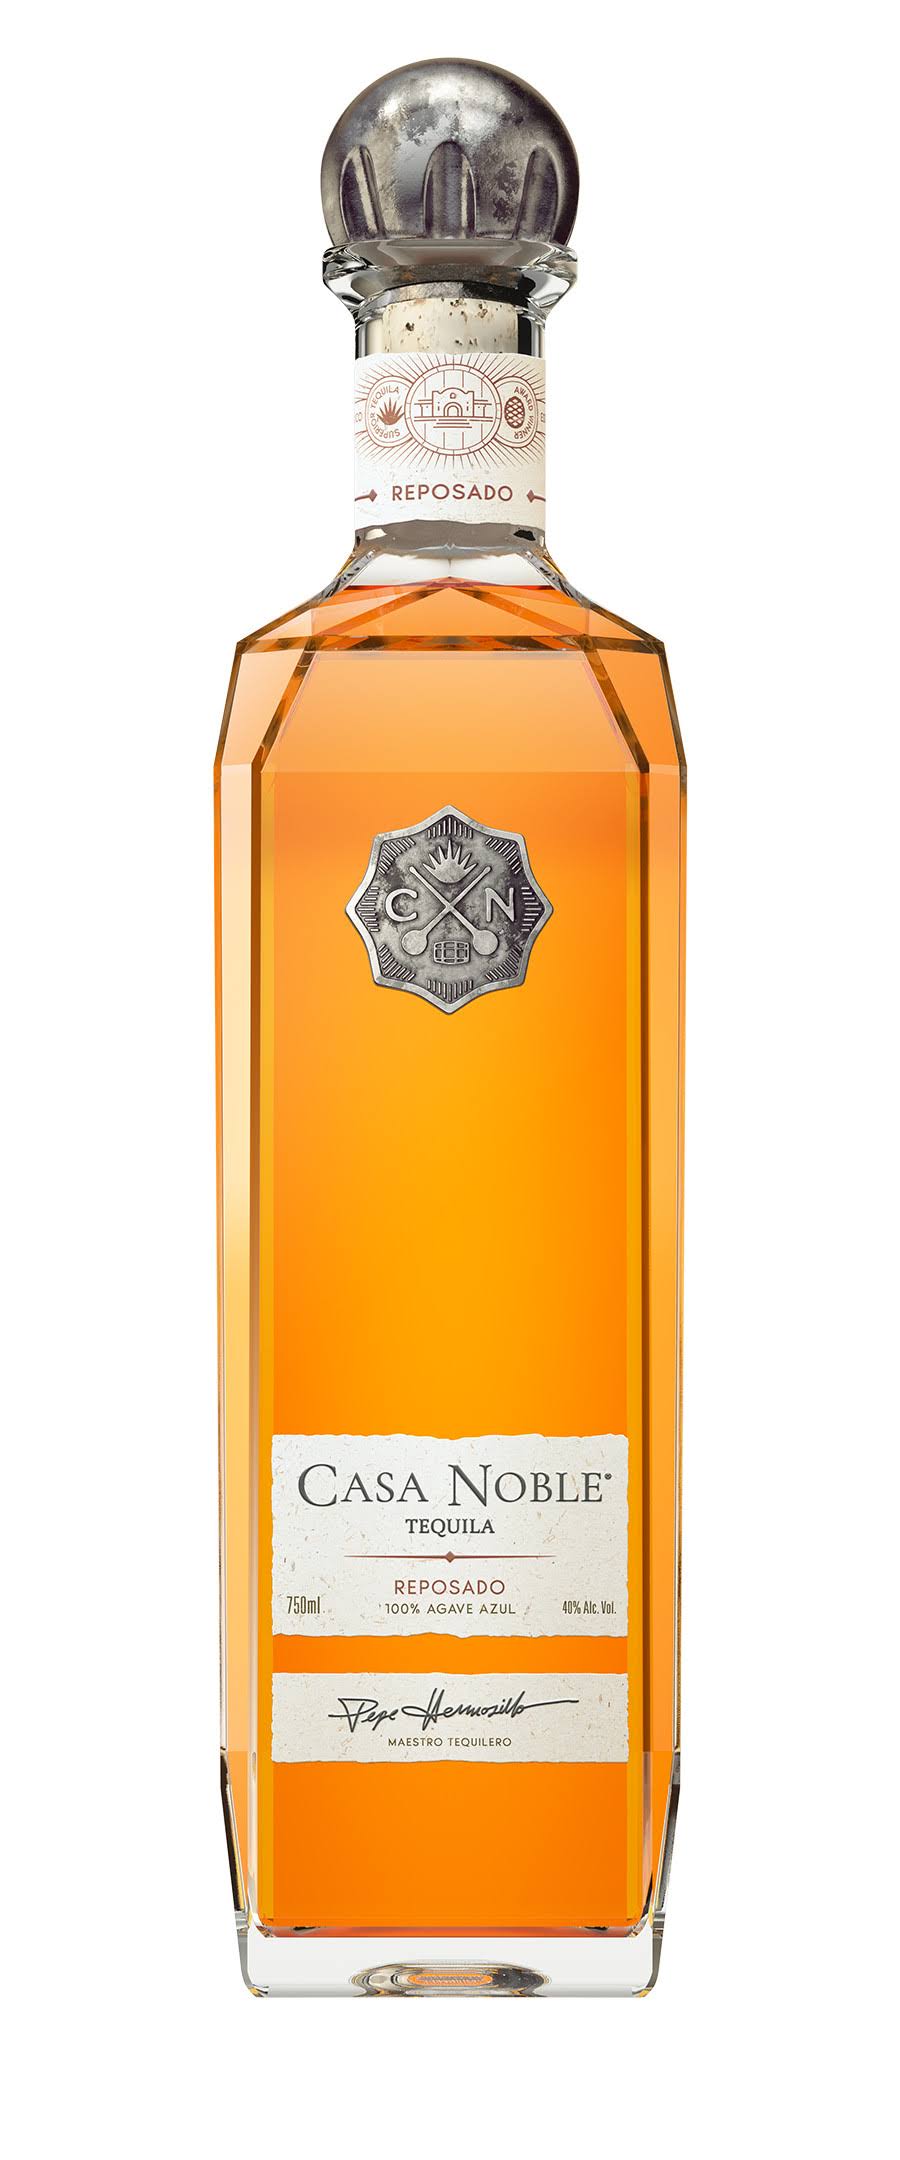 Casa Noble Tequila, Reposado, 100% De Agave - 750 ml